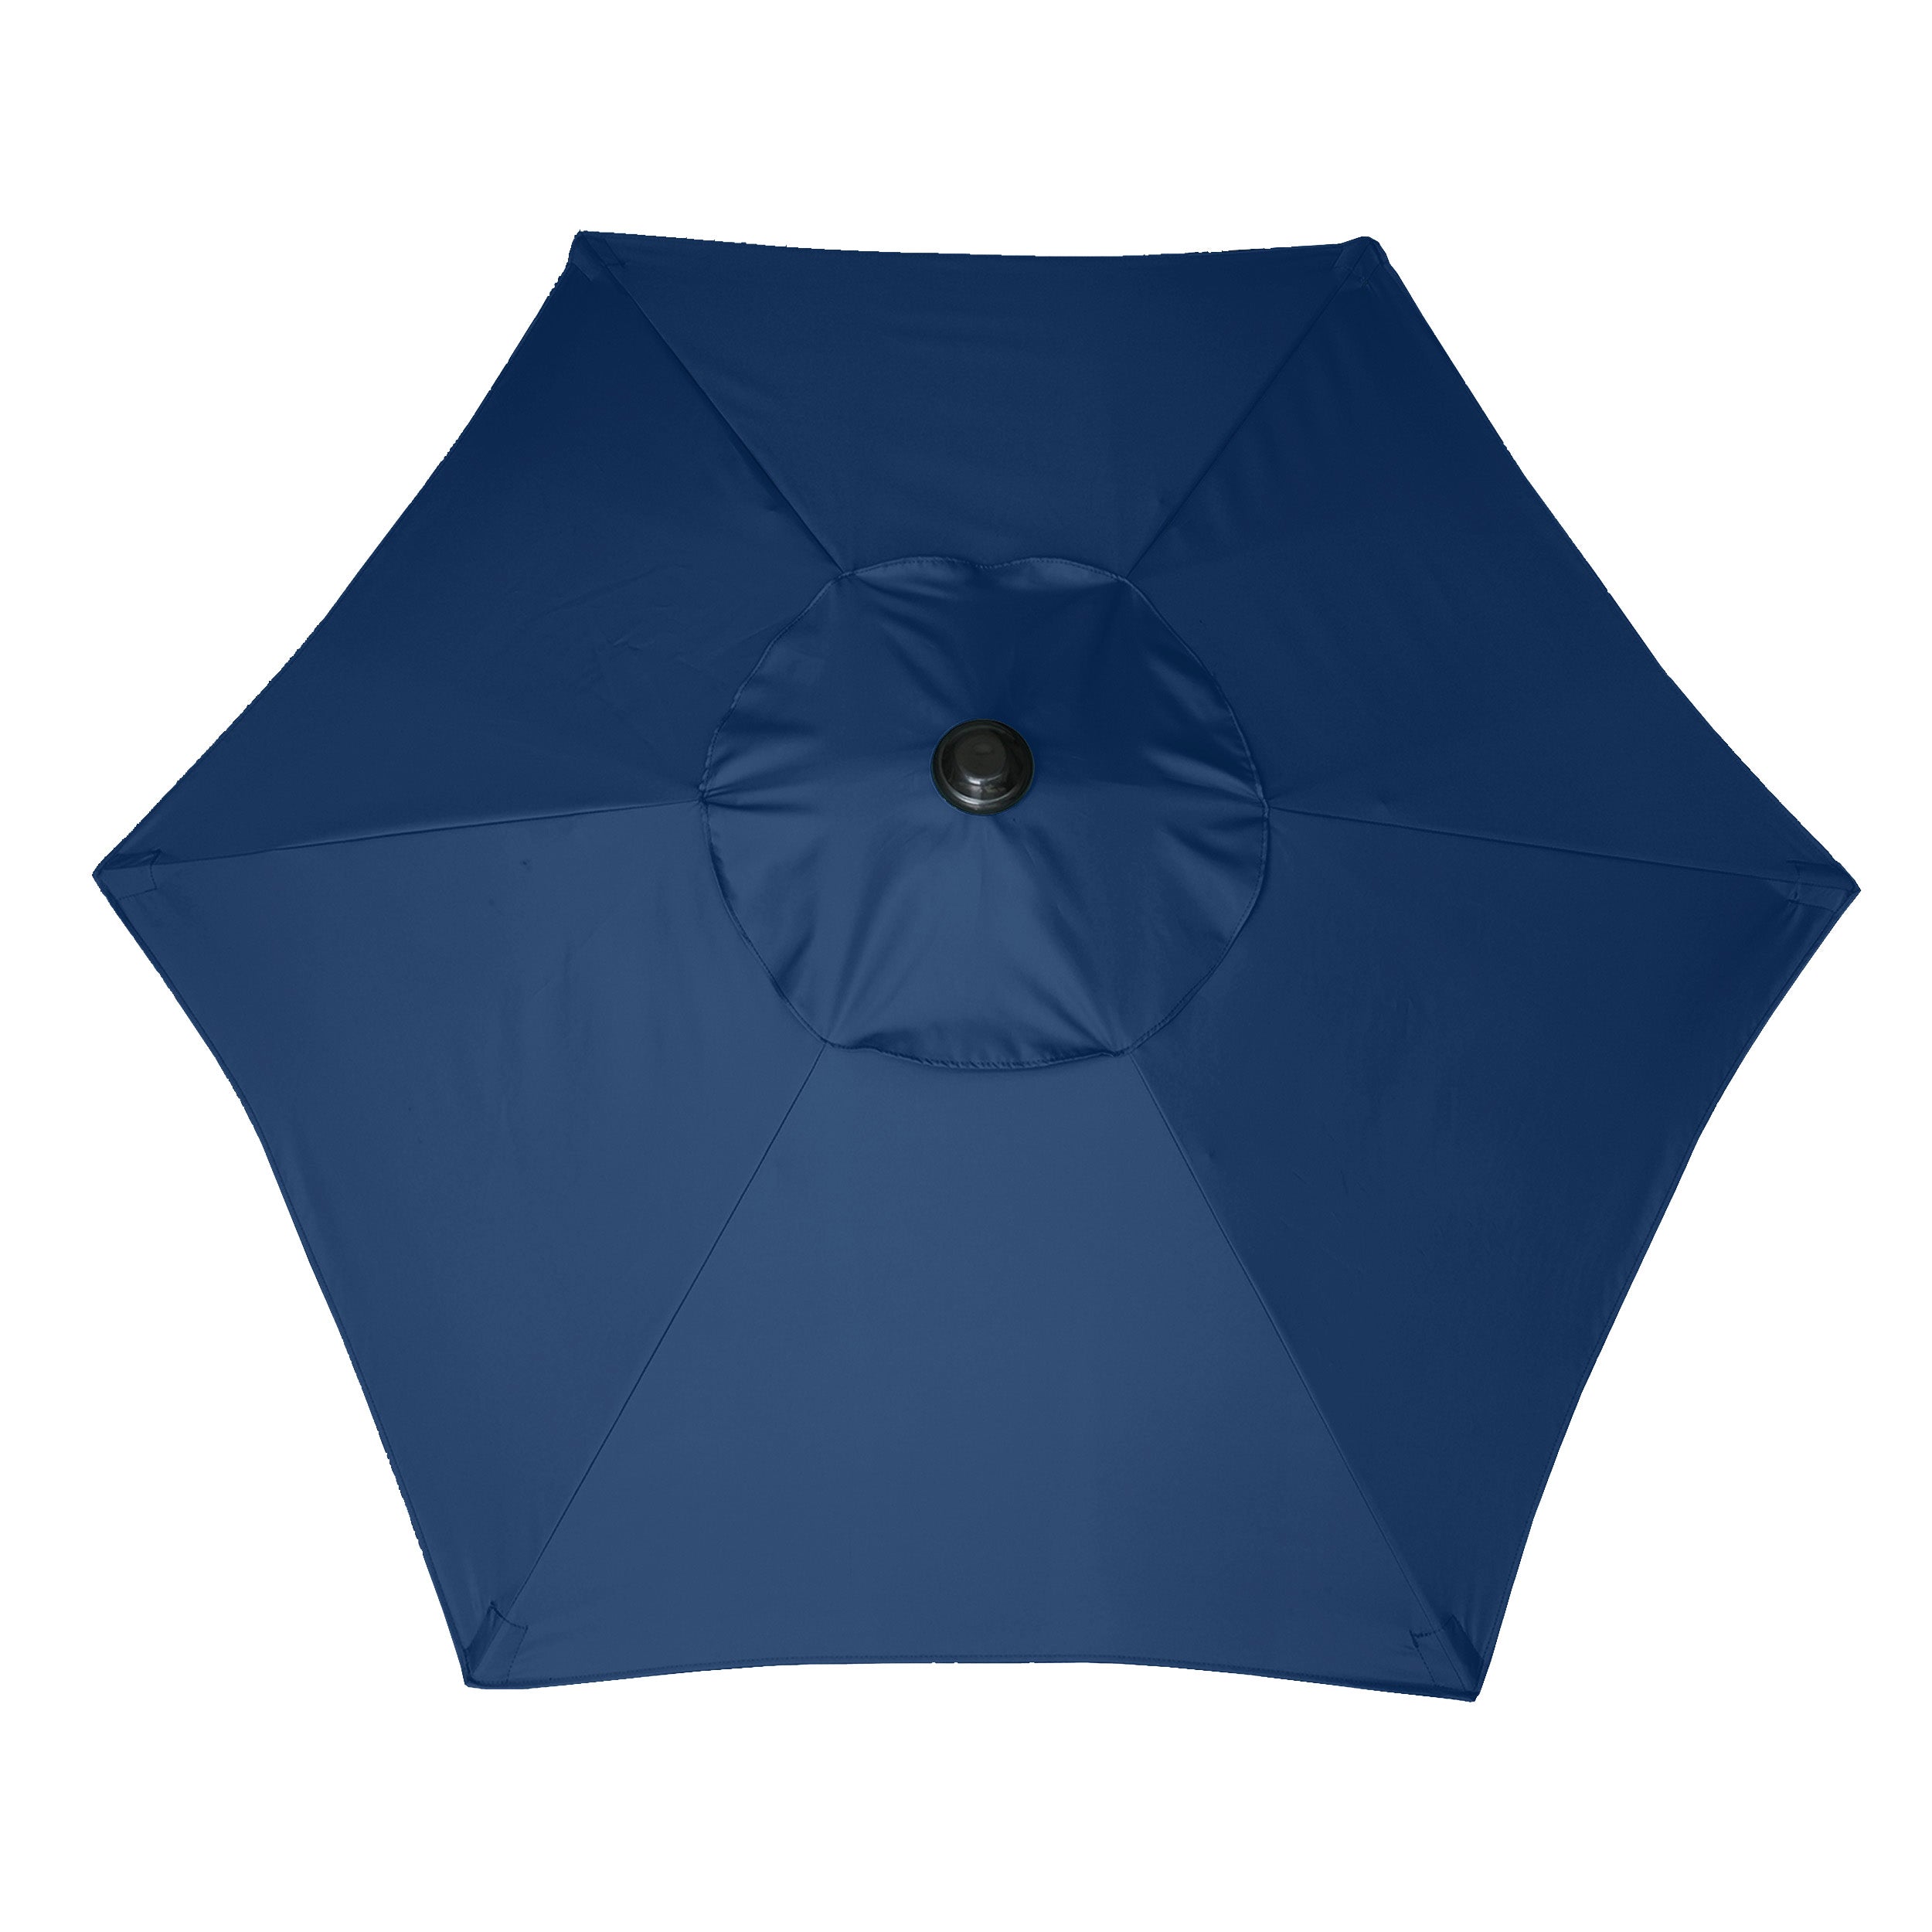 AMMSUN 6ft Patio Umbrella Outdoor Table Umbrellas with Push Button Tilt（Dark Blue）